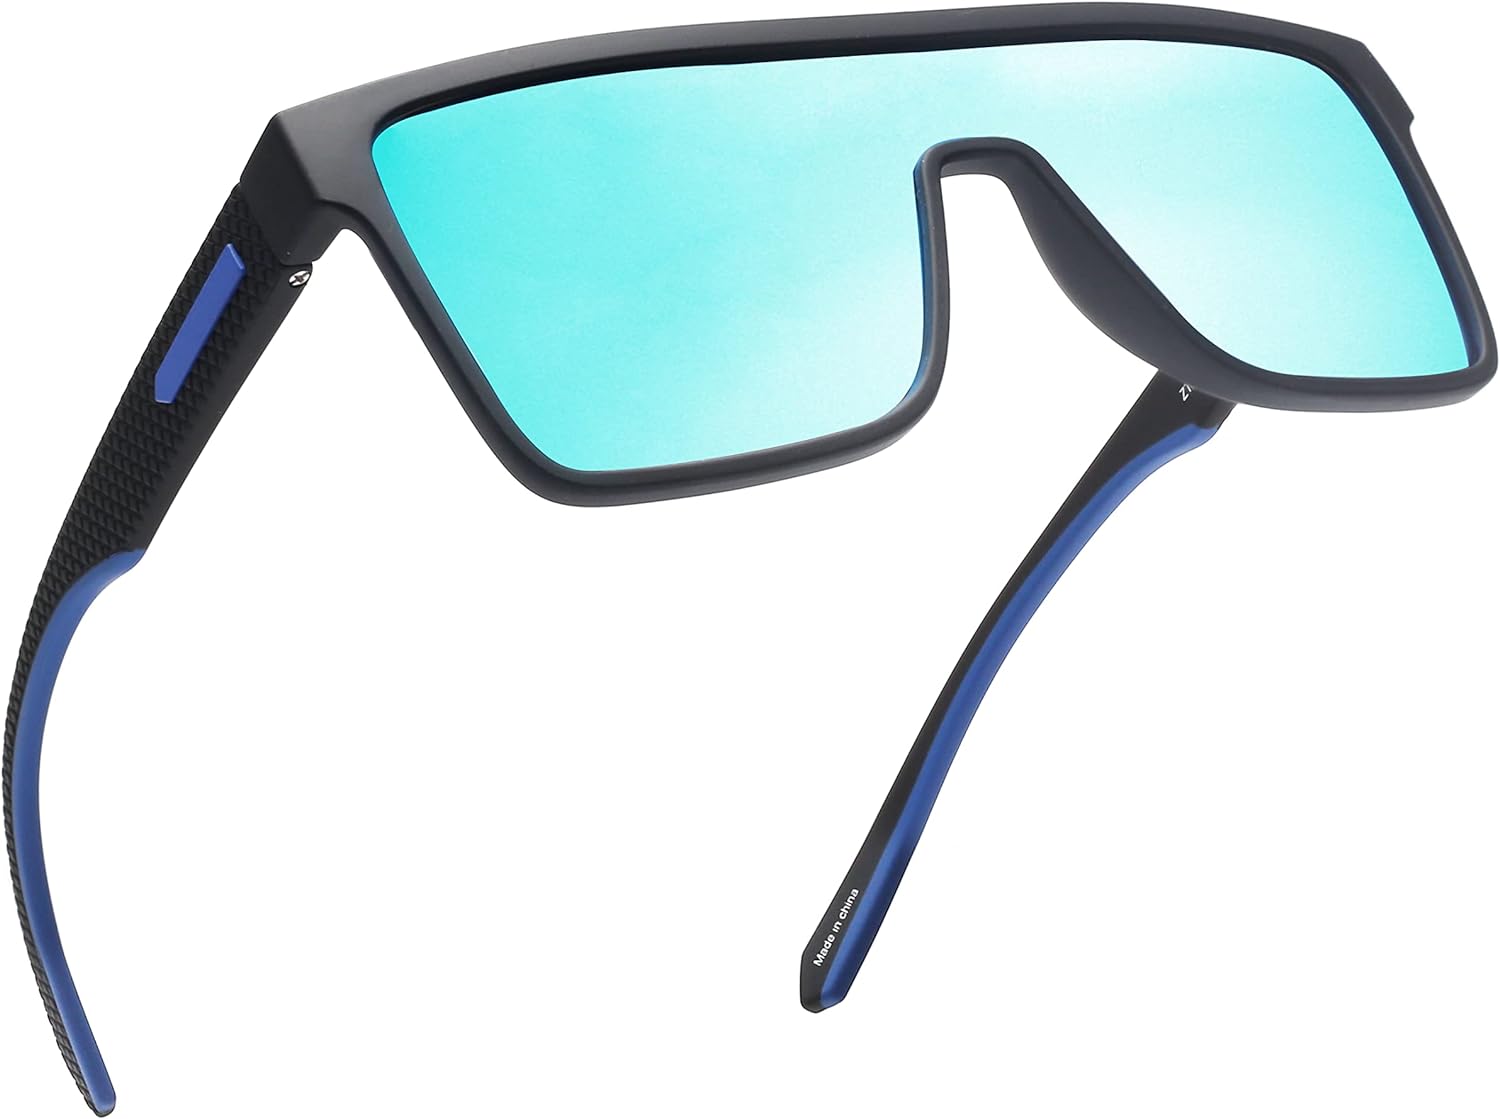 GLINDAR Polarized Shield Sunglasses for Men Square Flat Top Sports Glasses